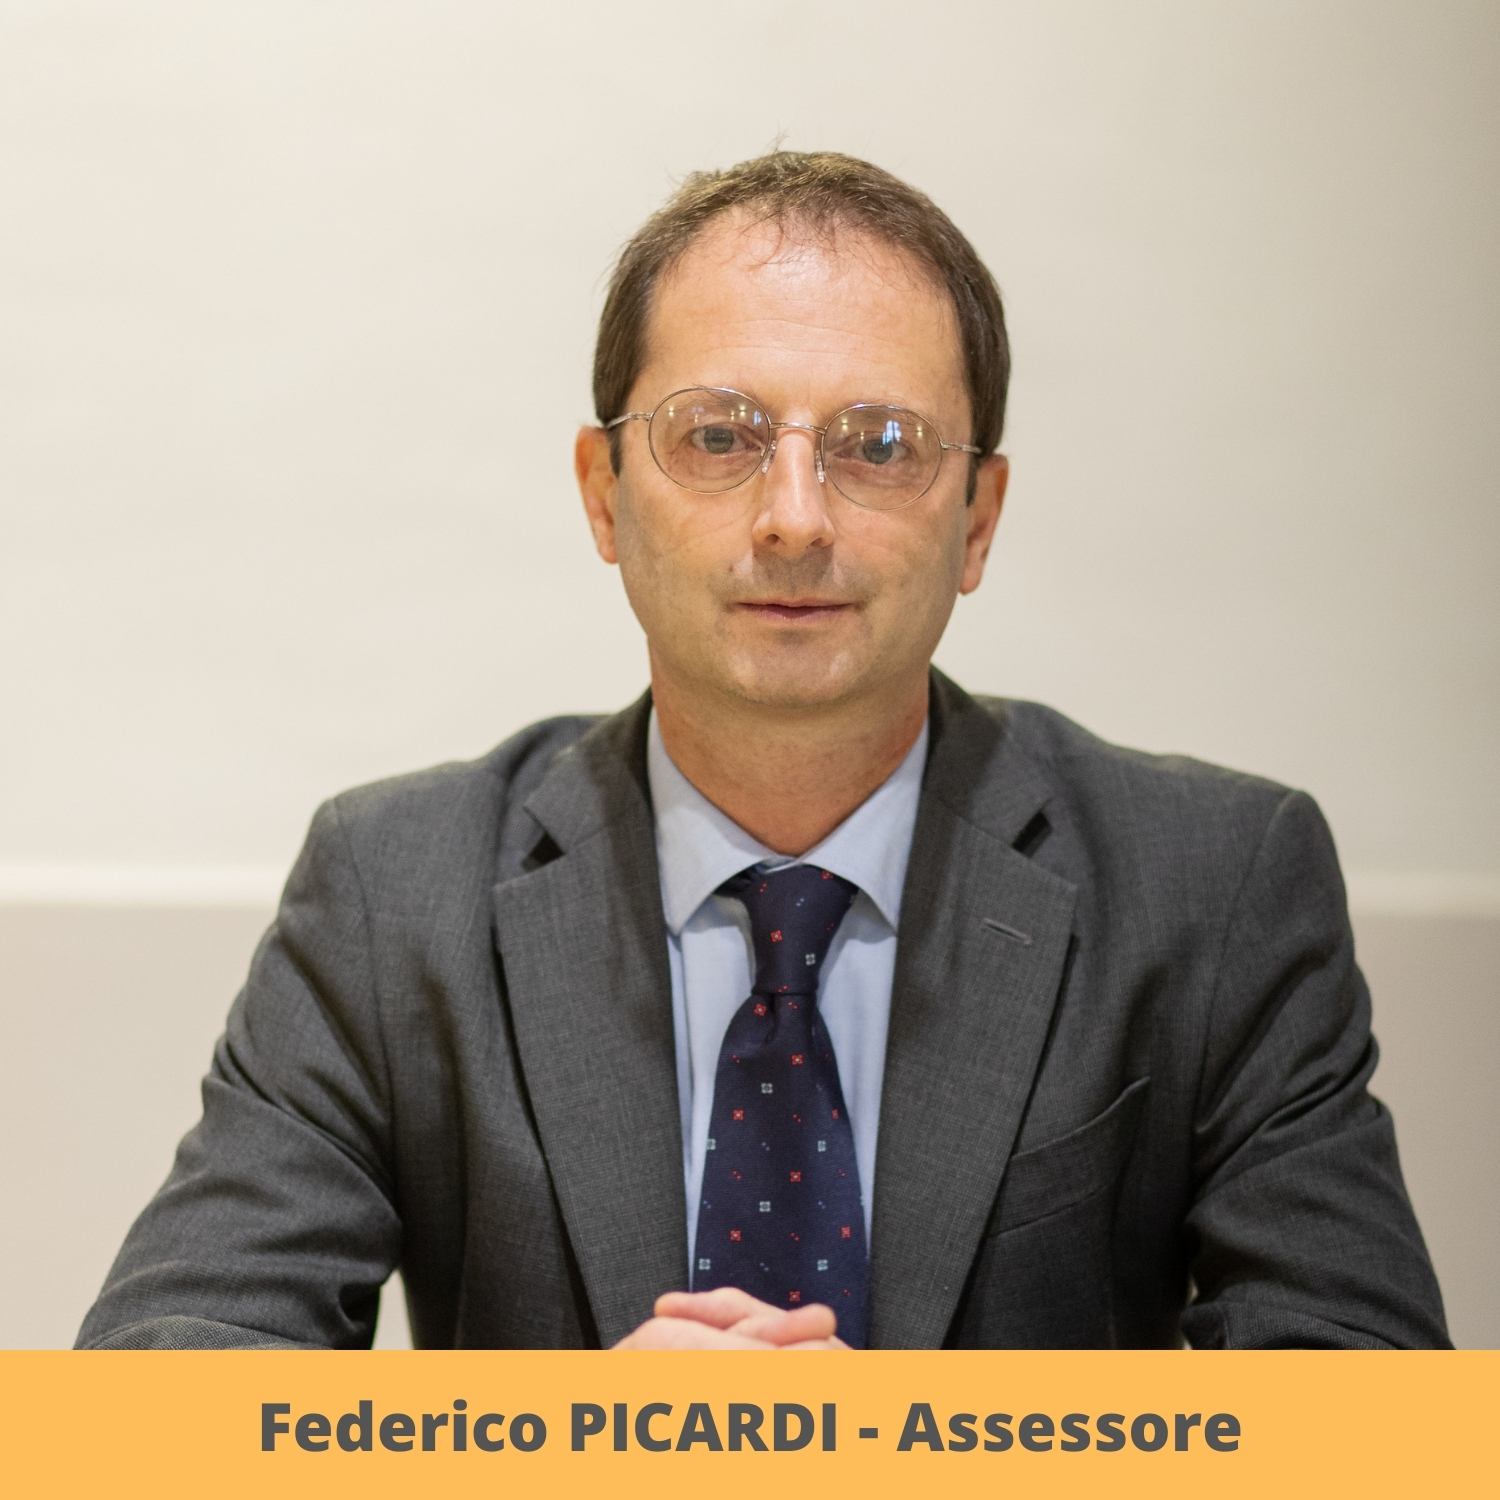 Federico PICARDI (Assessore)